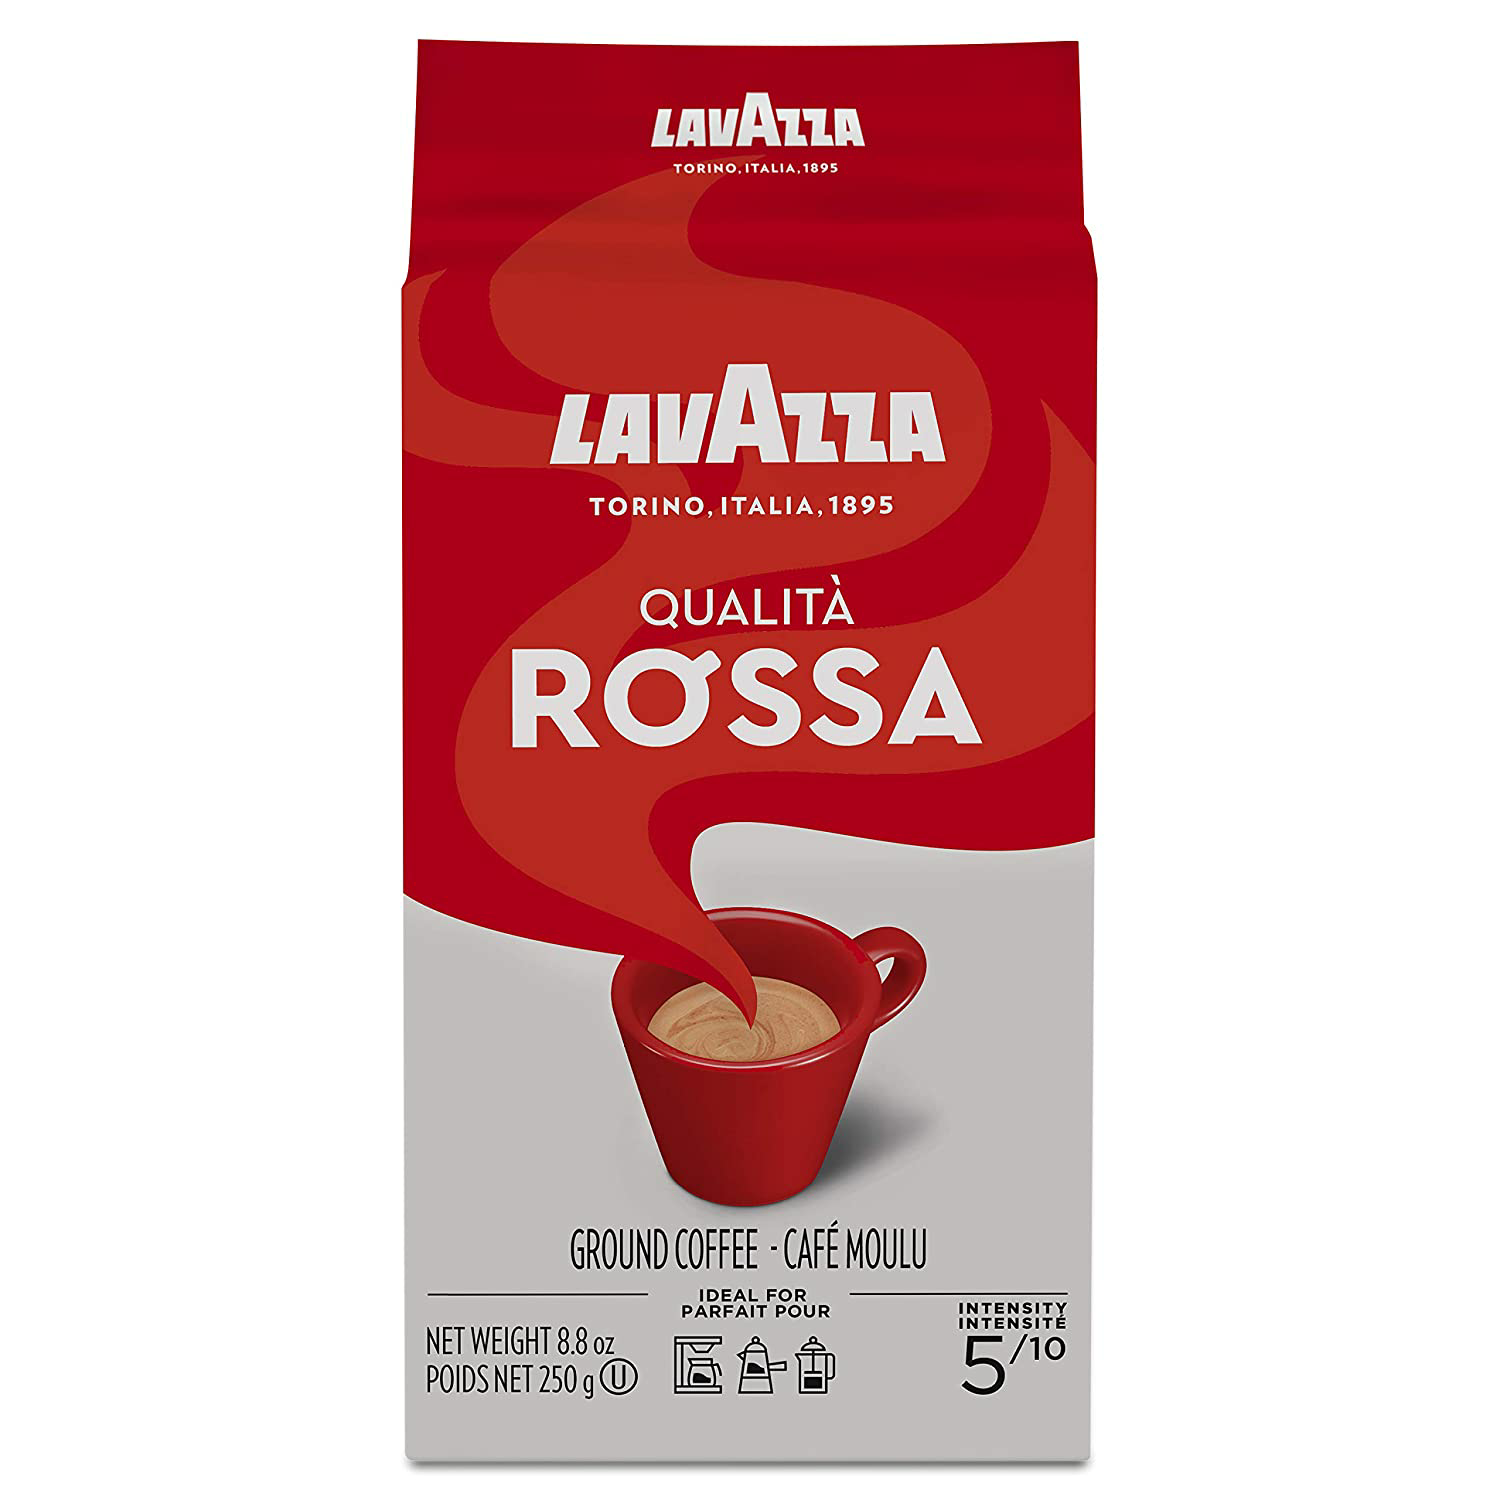 Lavazza Qualita Rossa Ground Coffee Blend, Medium Roast, 8.8 Ounce (Pack of 4) $15.66